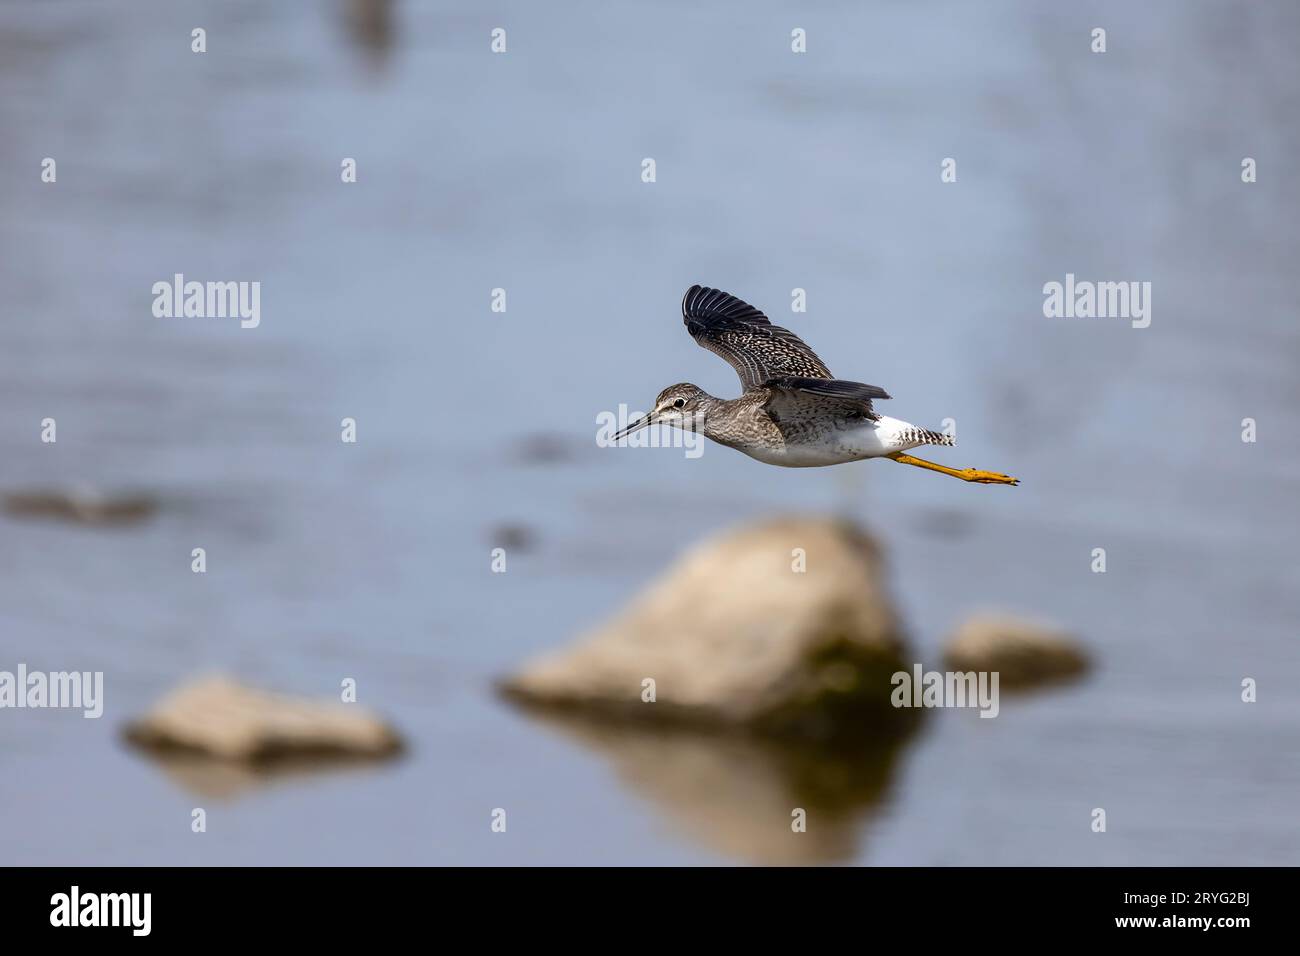 Waders or shorebirds Stock Photo